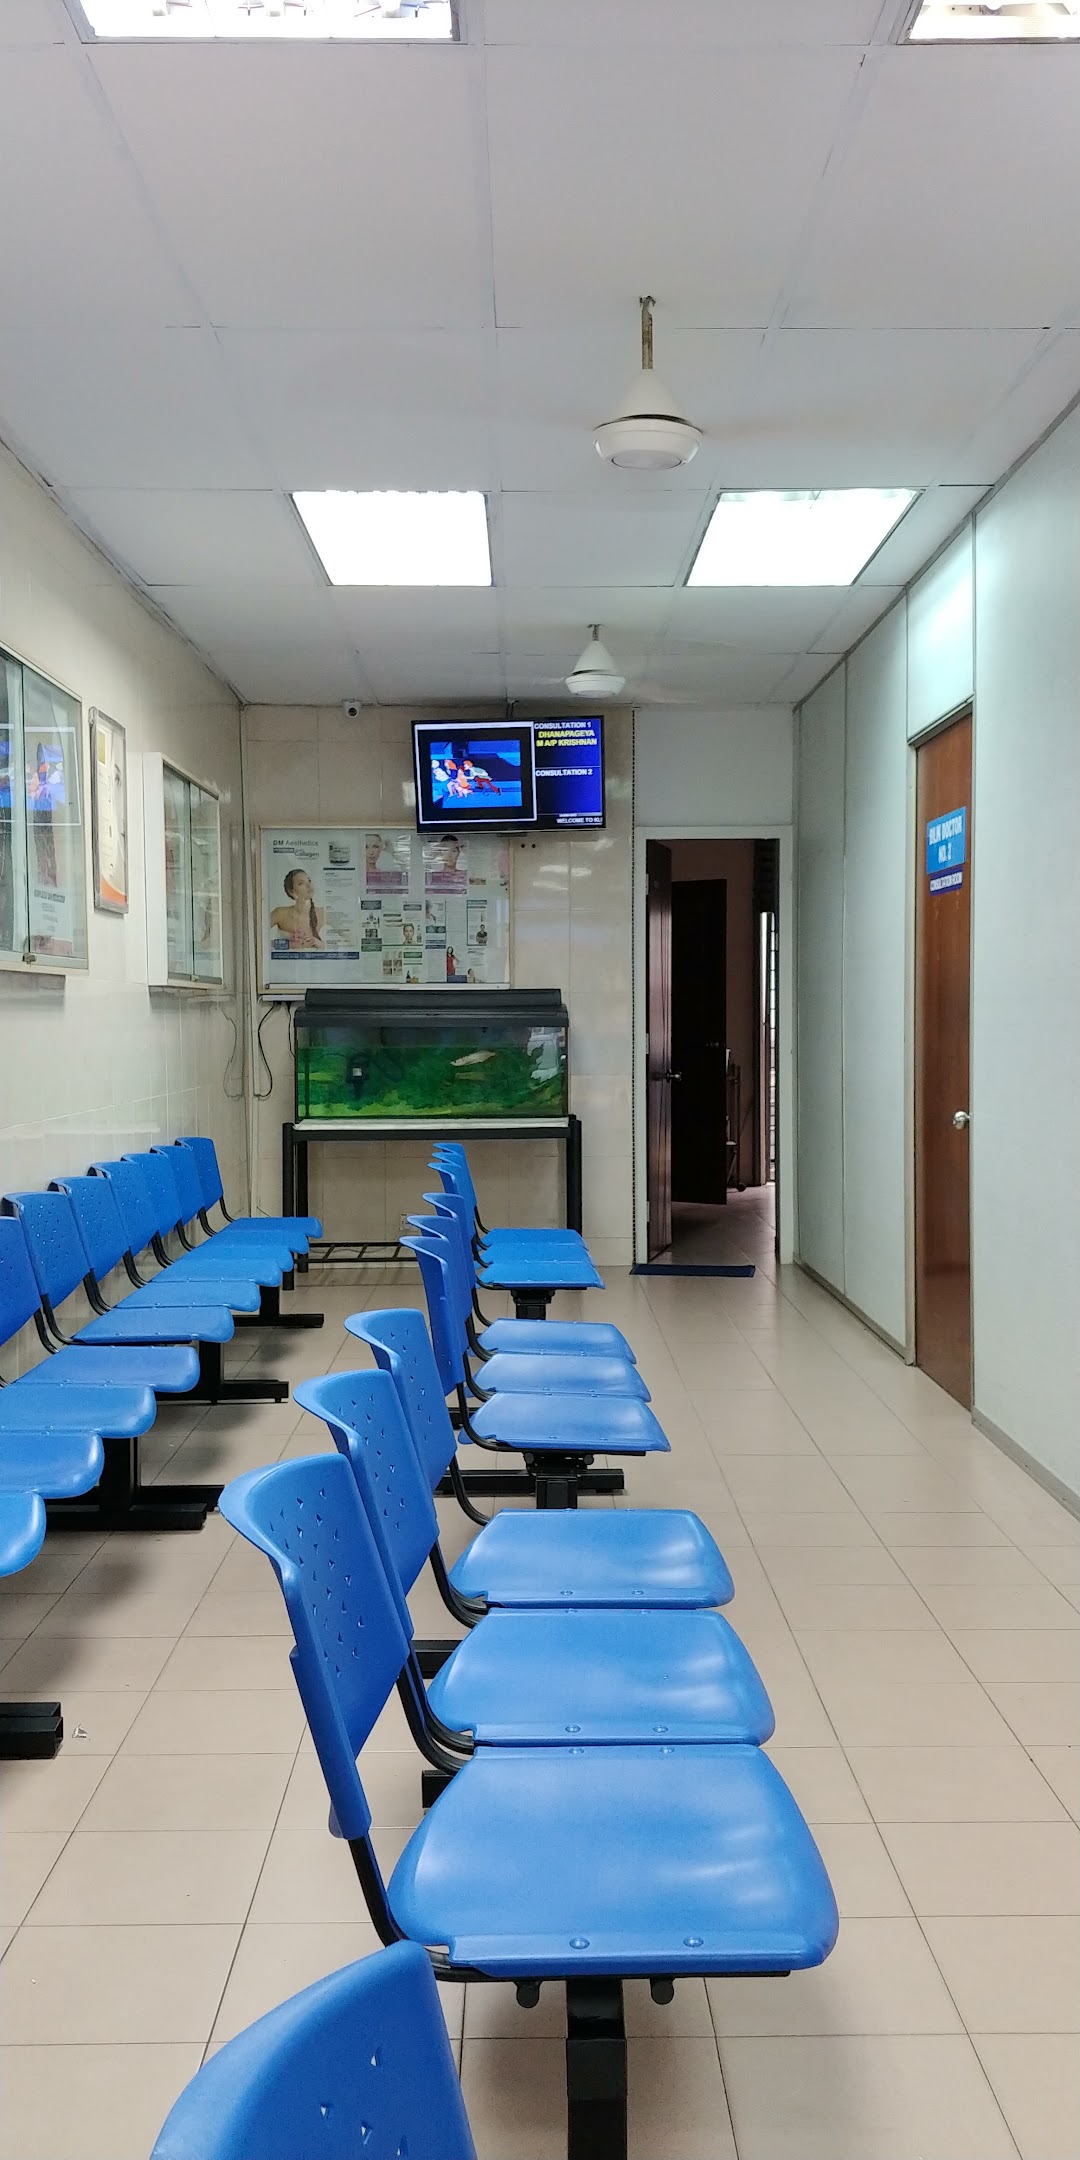 klinik